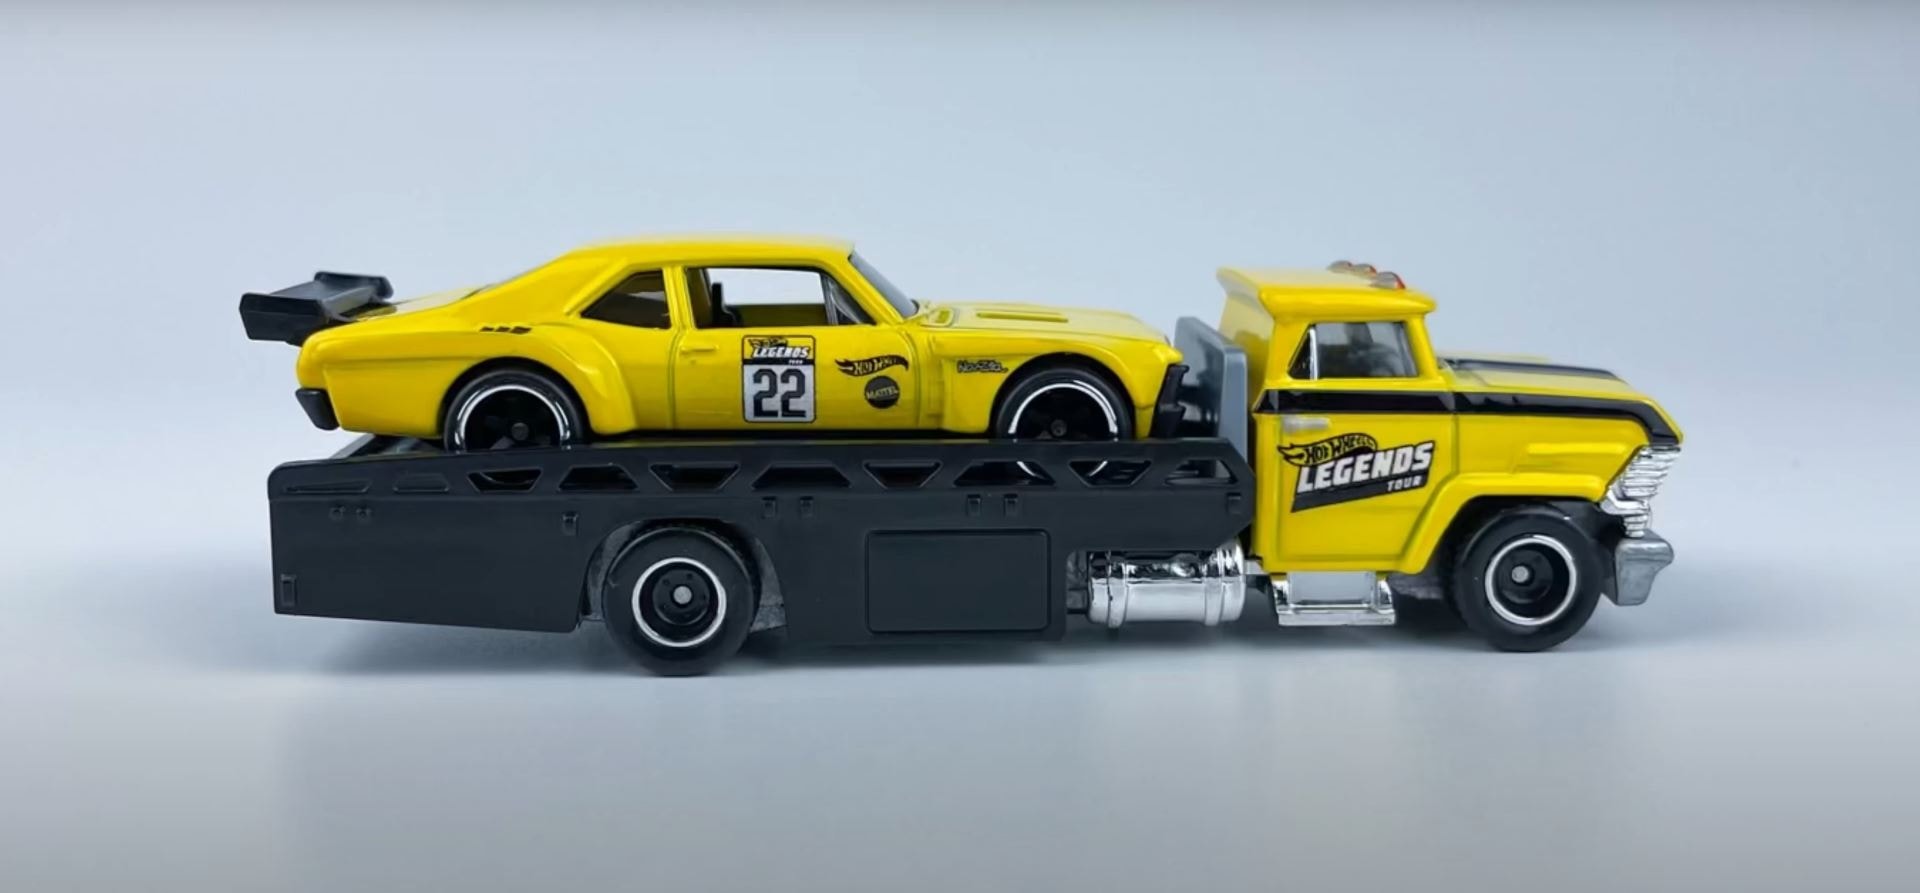 2022 Hot Wheels Team Transport Set Reveals 1970 Chevy Nova and Matching